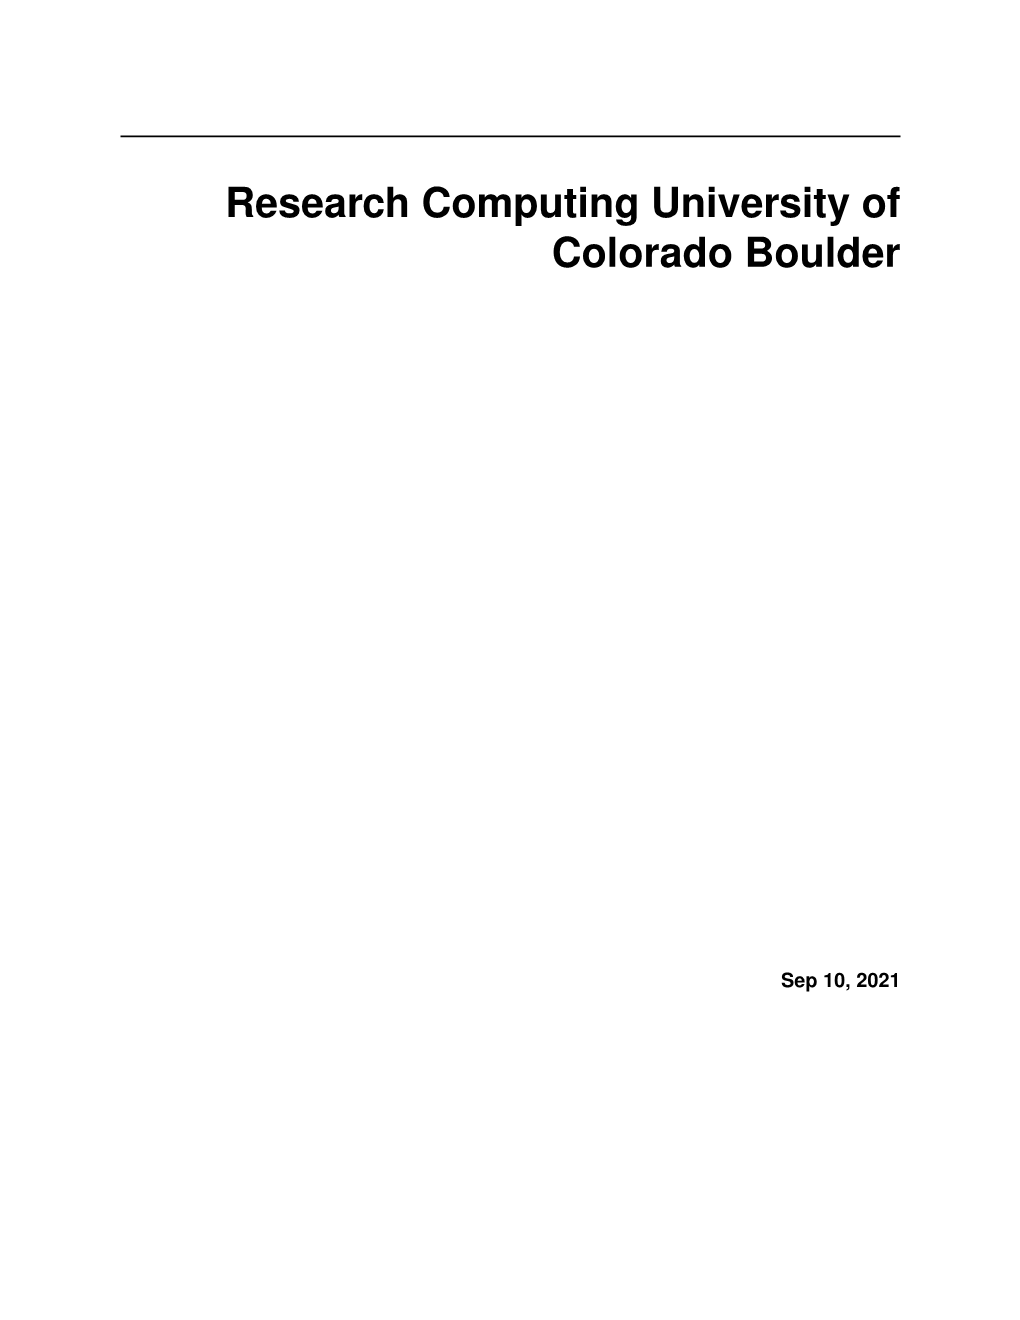 Research Computing University of Colorado Boulder